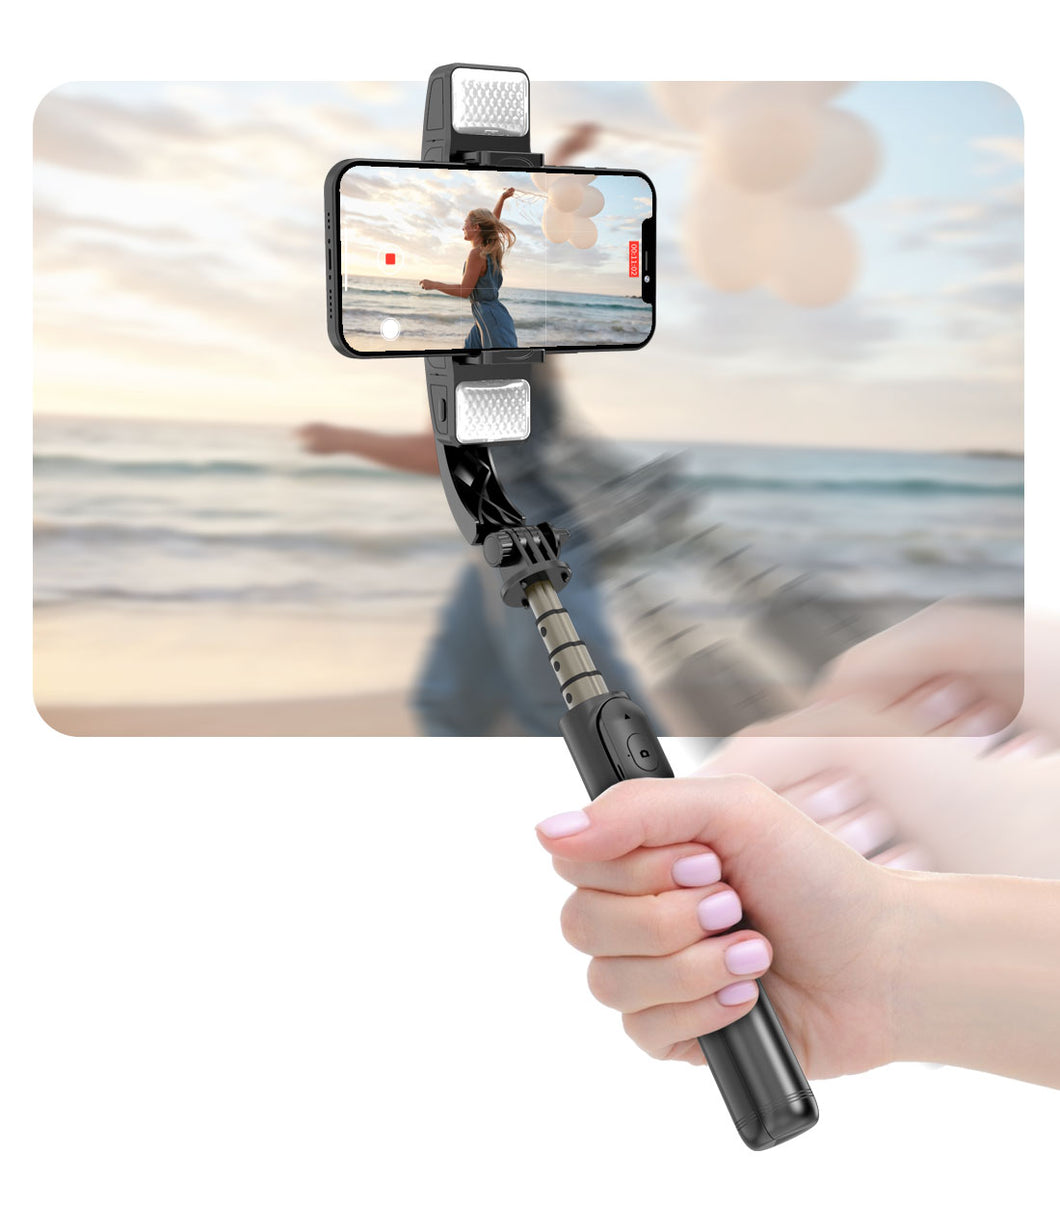 DINelek Middle met Dubbele Led Verlichting 3in1 Anti-shake Gimbal/Mobiele Telefoon Stabilisator + Selfie Stick + Driepoot Statief